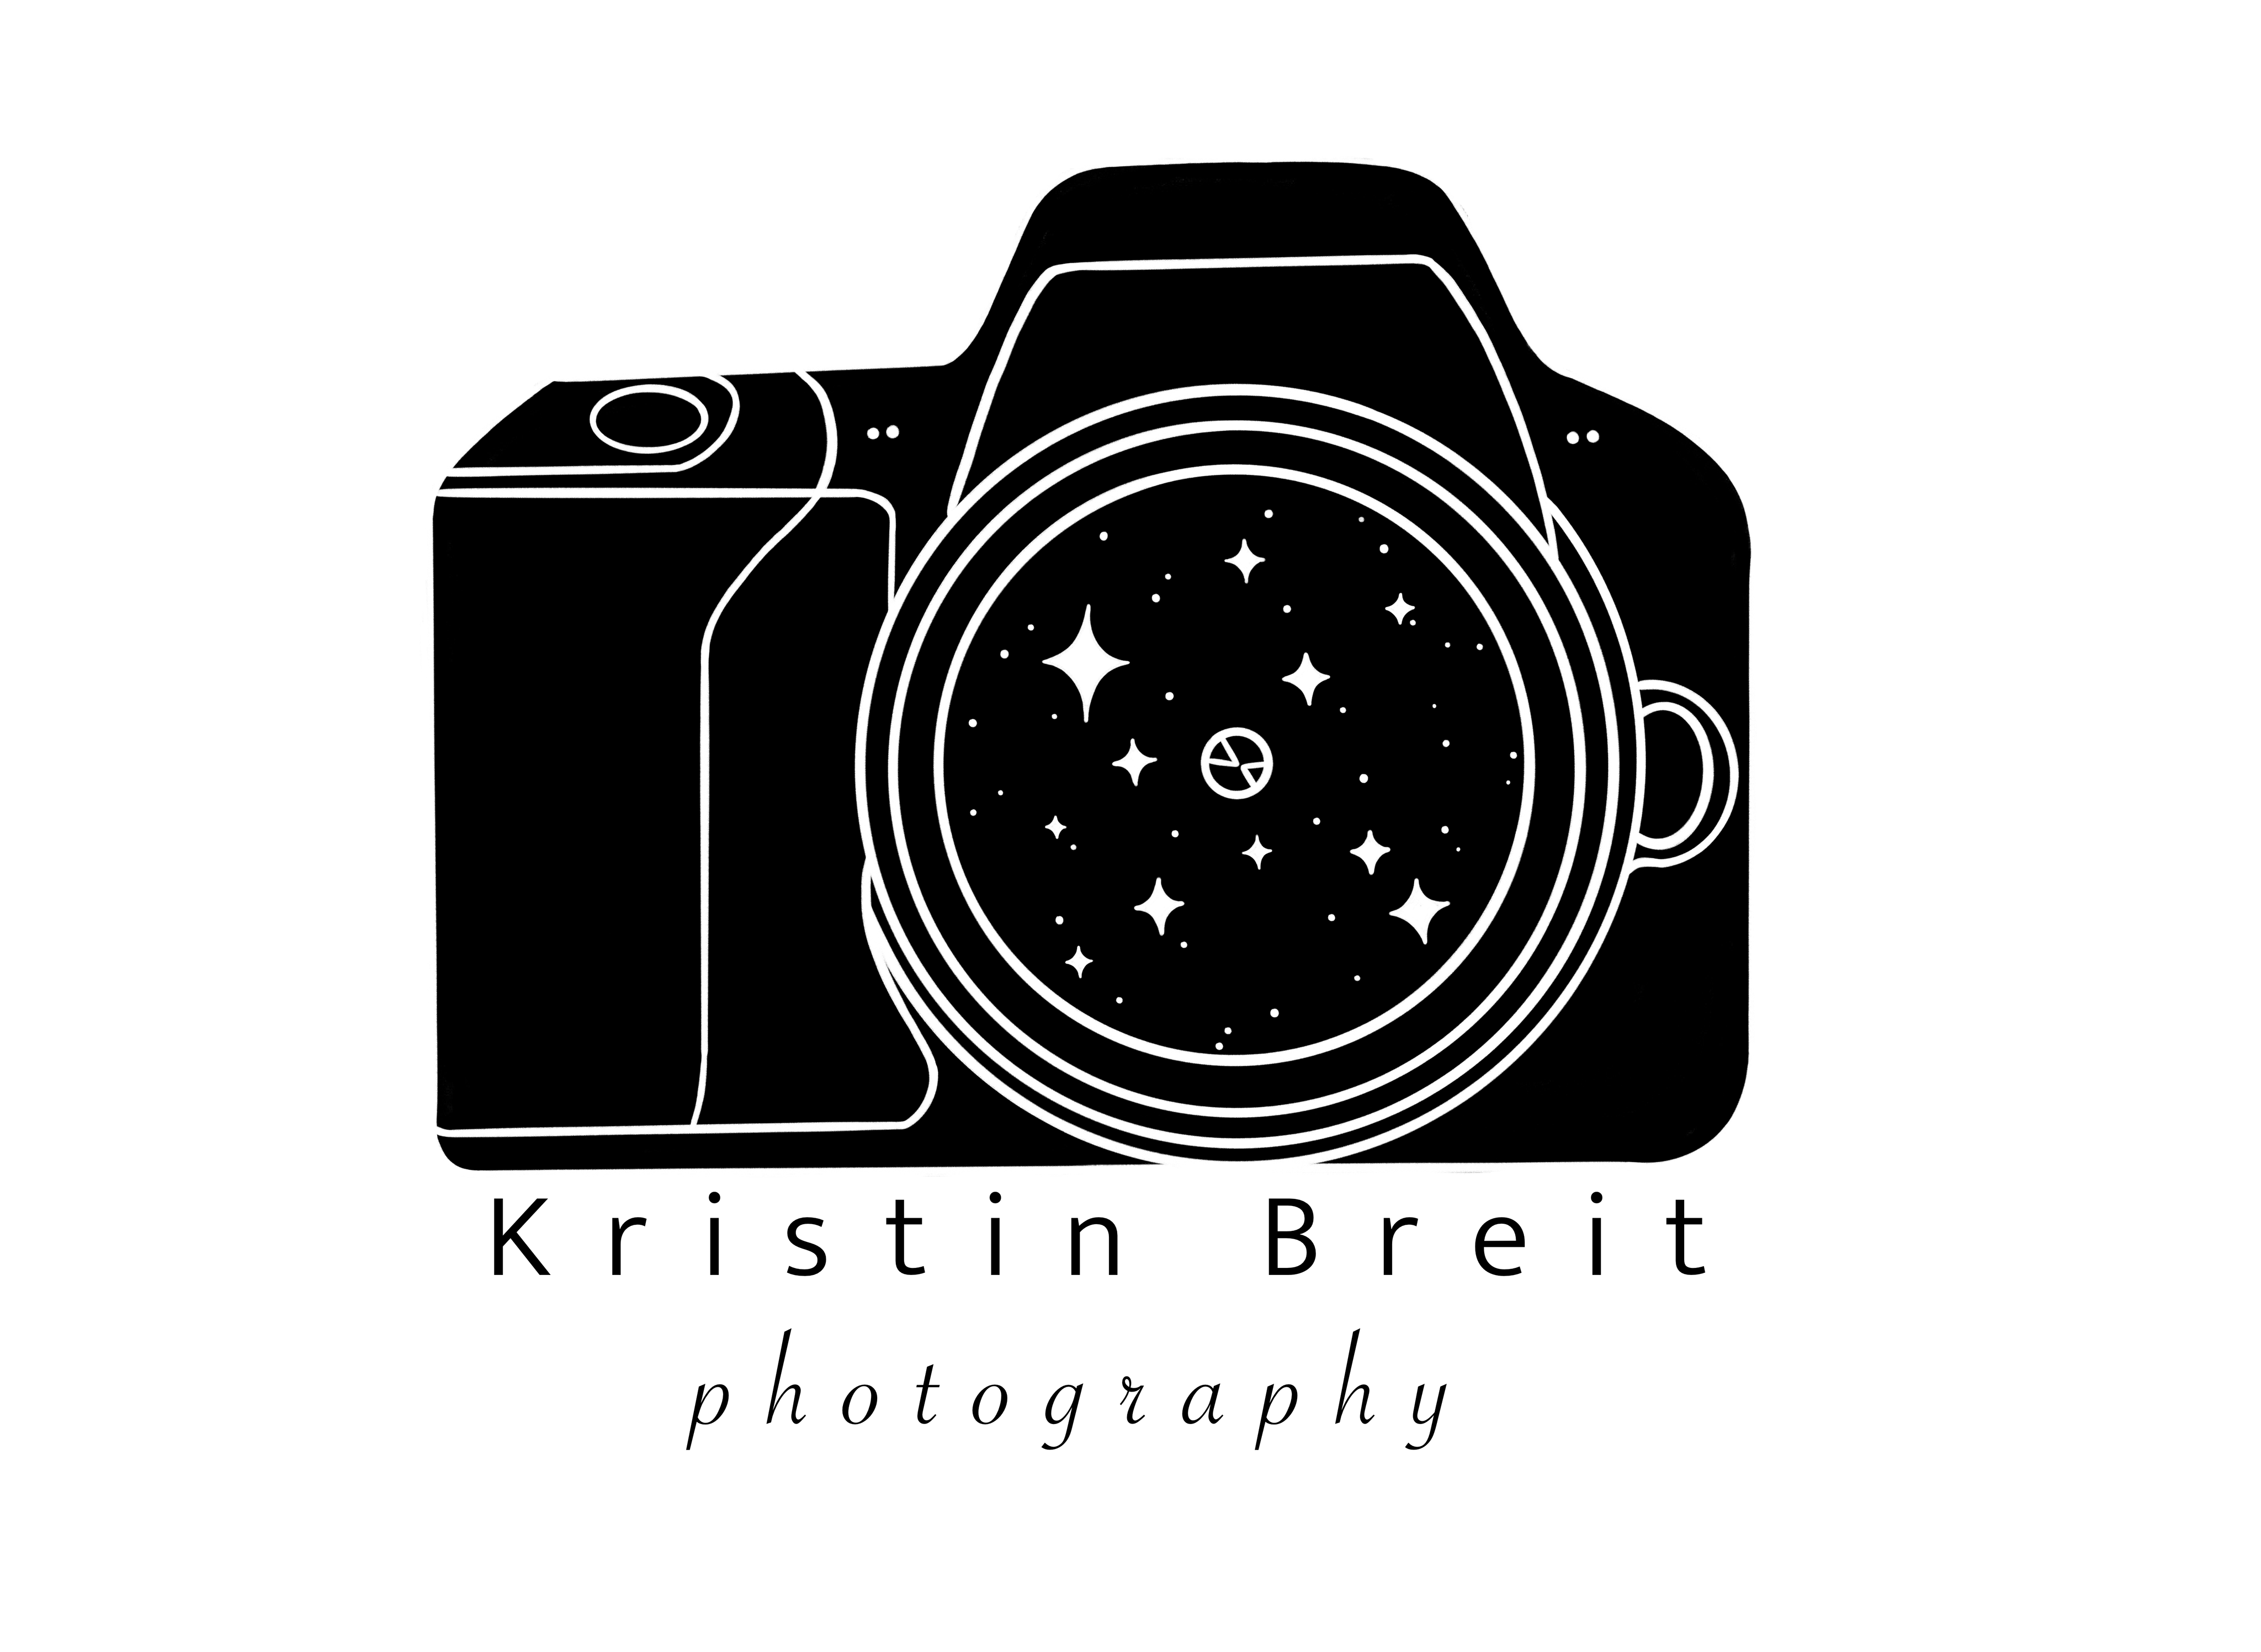 Kristin Breitkreutz